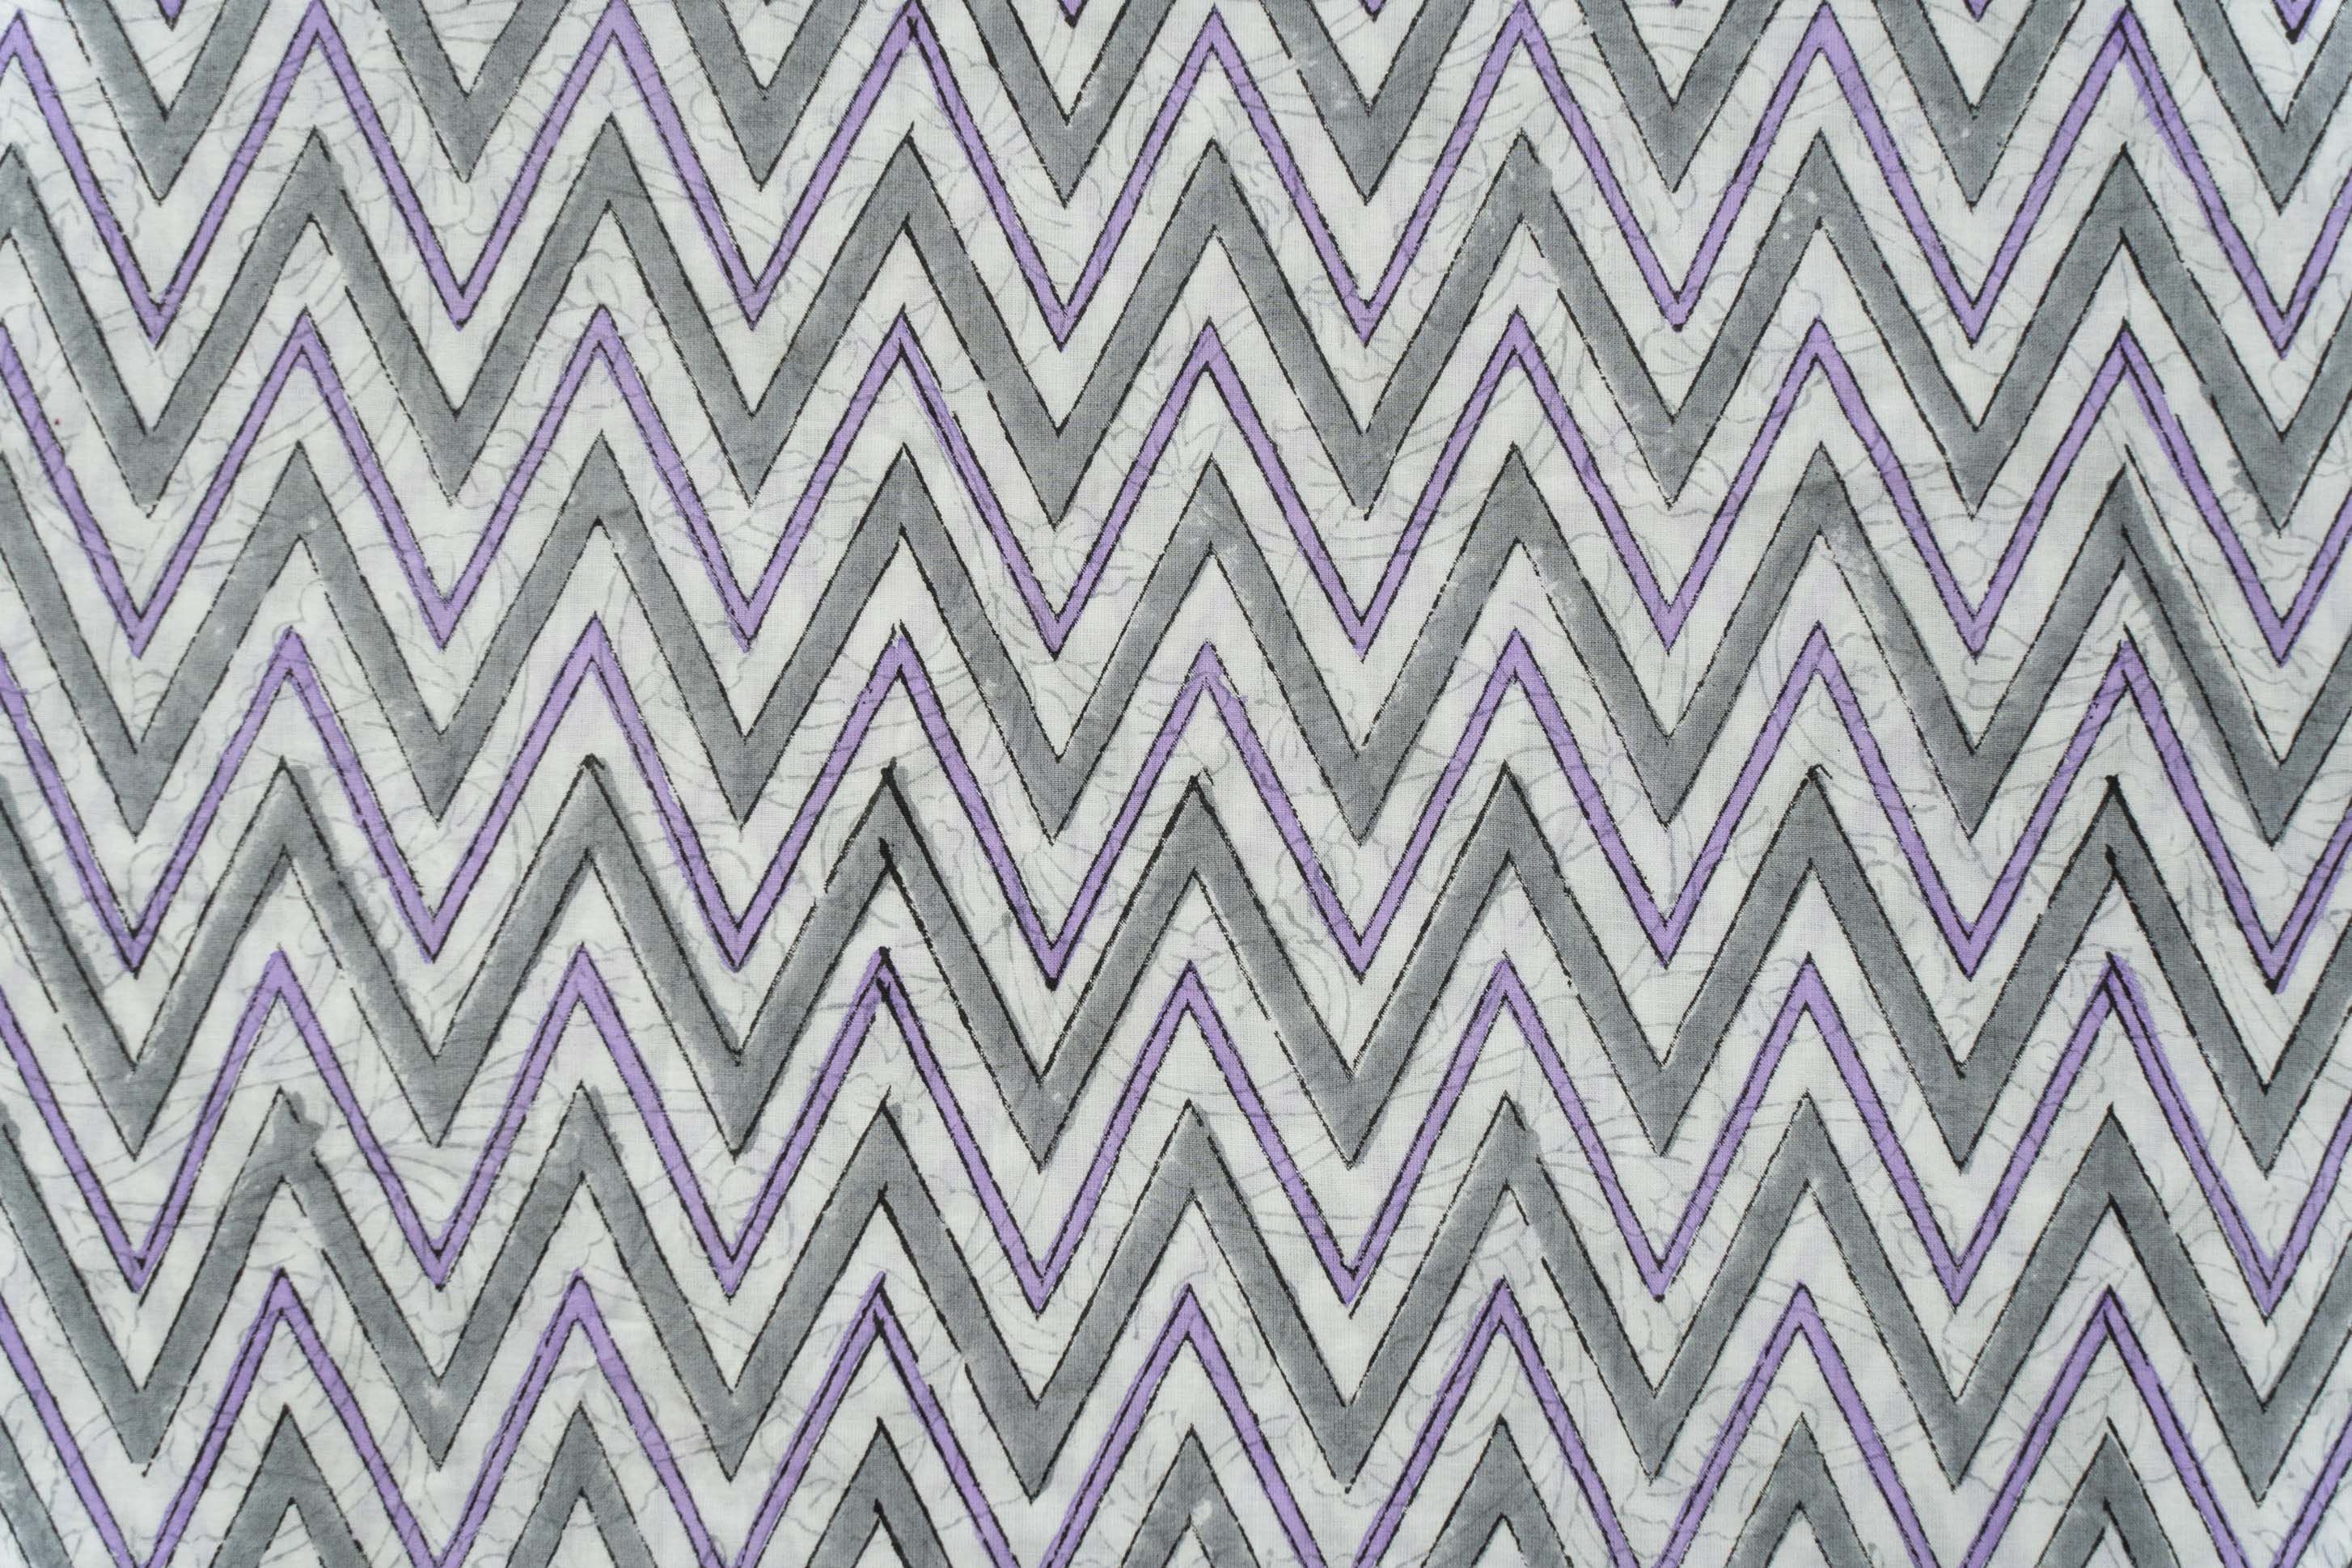 Violet Chevron Cotton Fabric